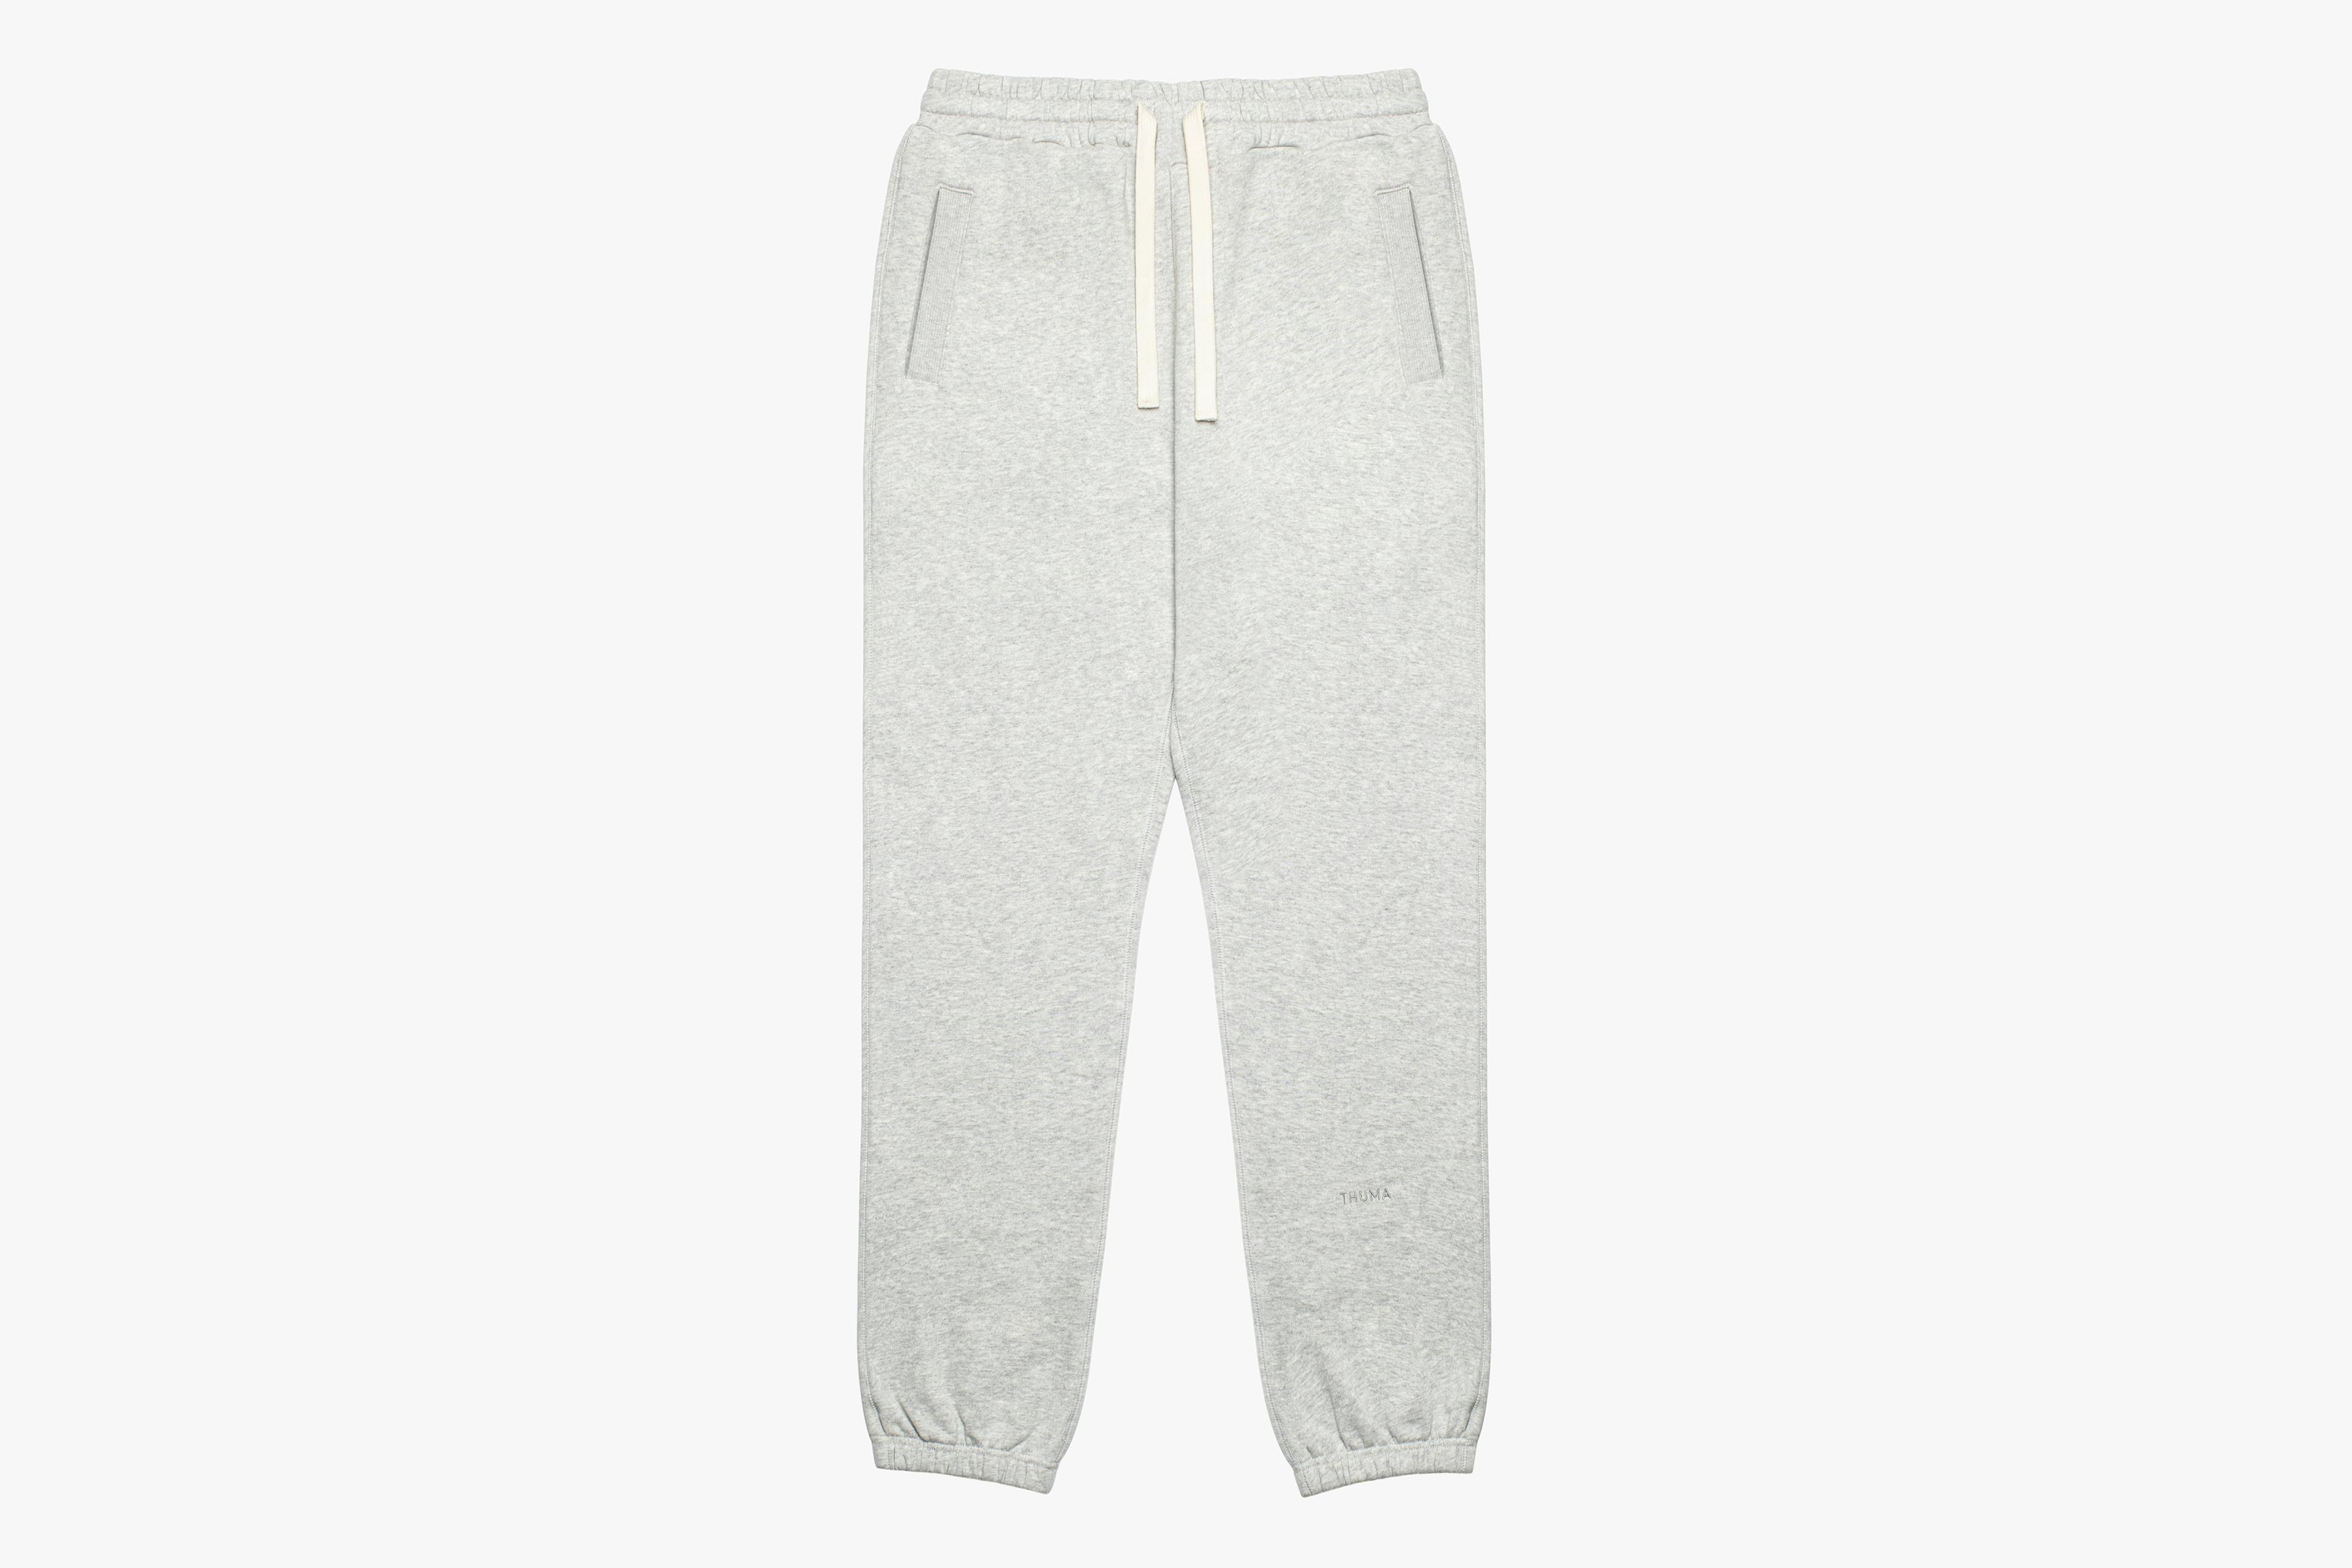 PDP Image: Lounge Sweatpants (M's Fit - Grey) - 3:2 - Front